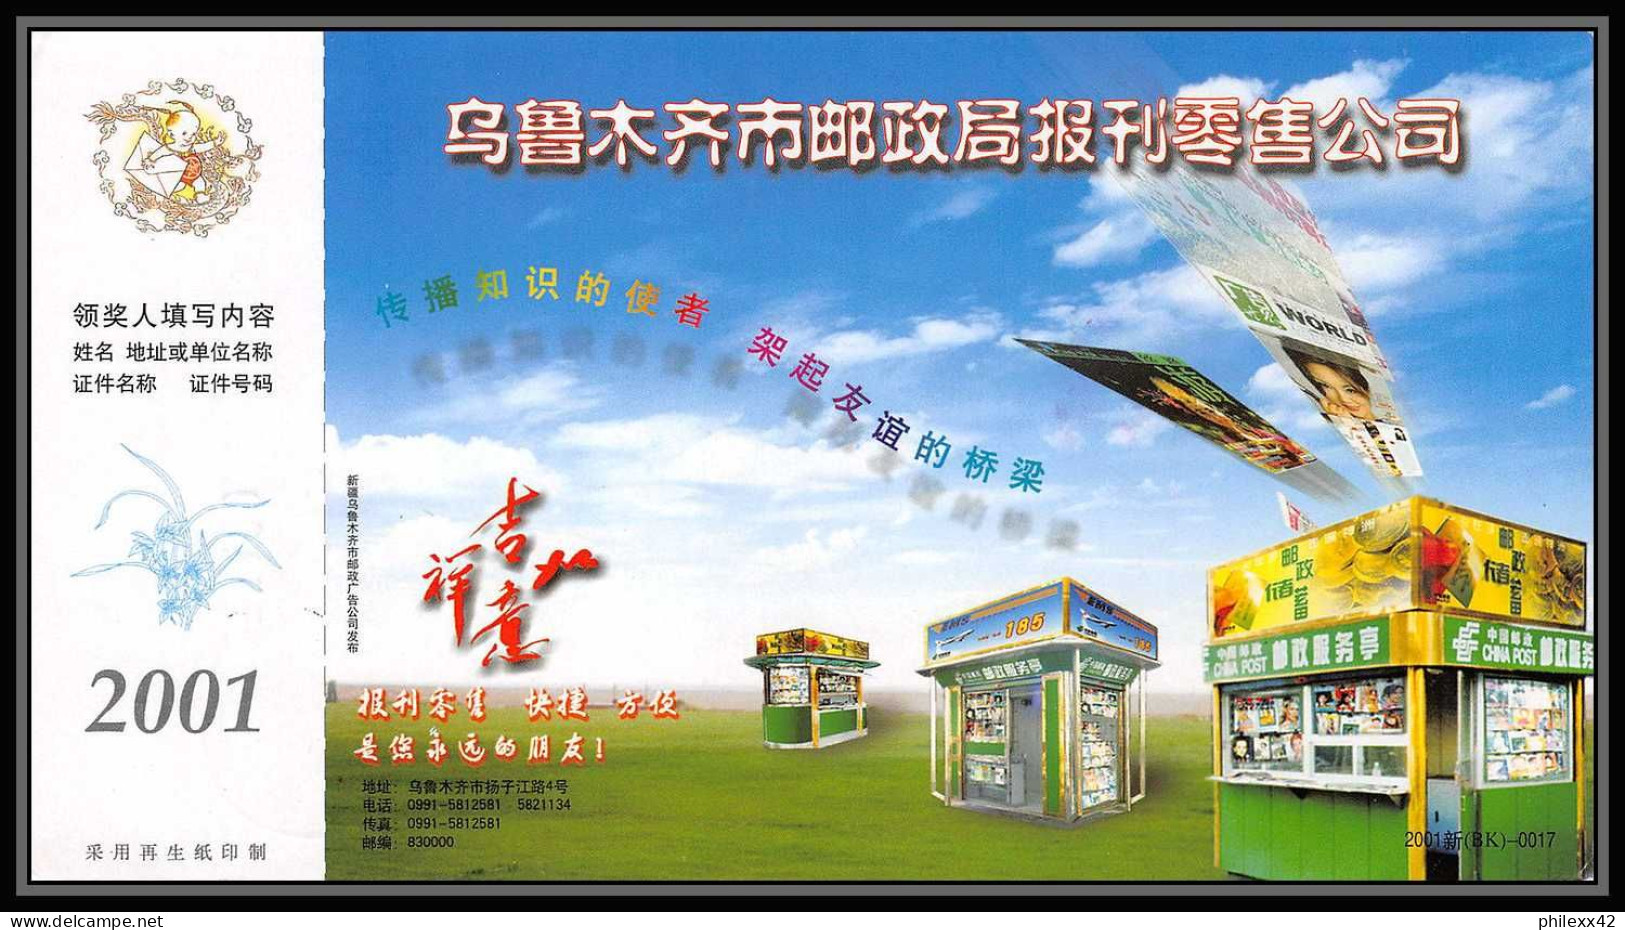 1358 Espace (space Raumfahrt) Entier Postal (Stamped Stationery) CHINE (china) SHENZHOU 6 Junlong / Haisheng 17/10/2005 - Asie